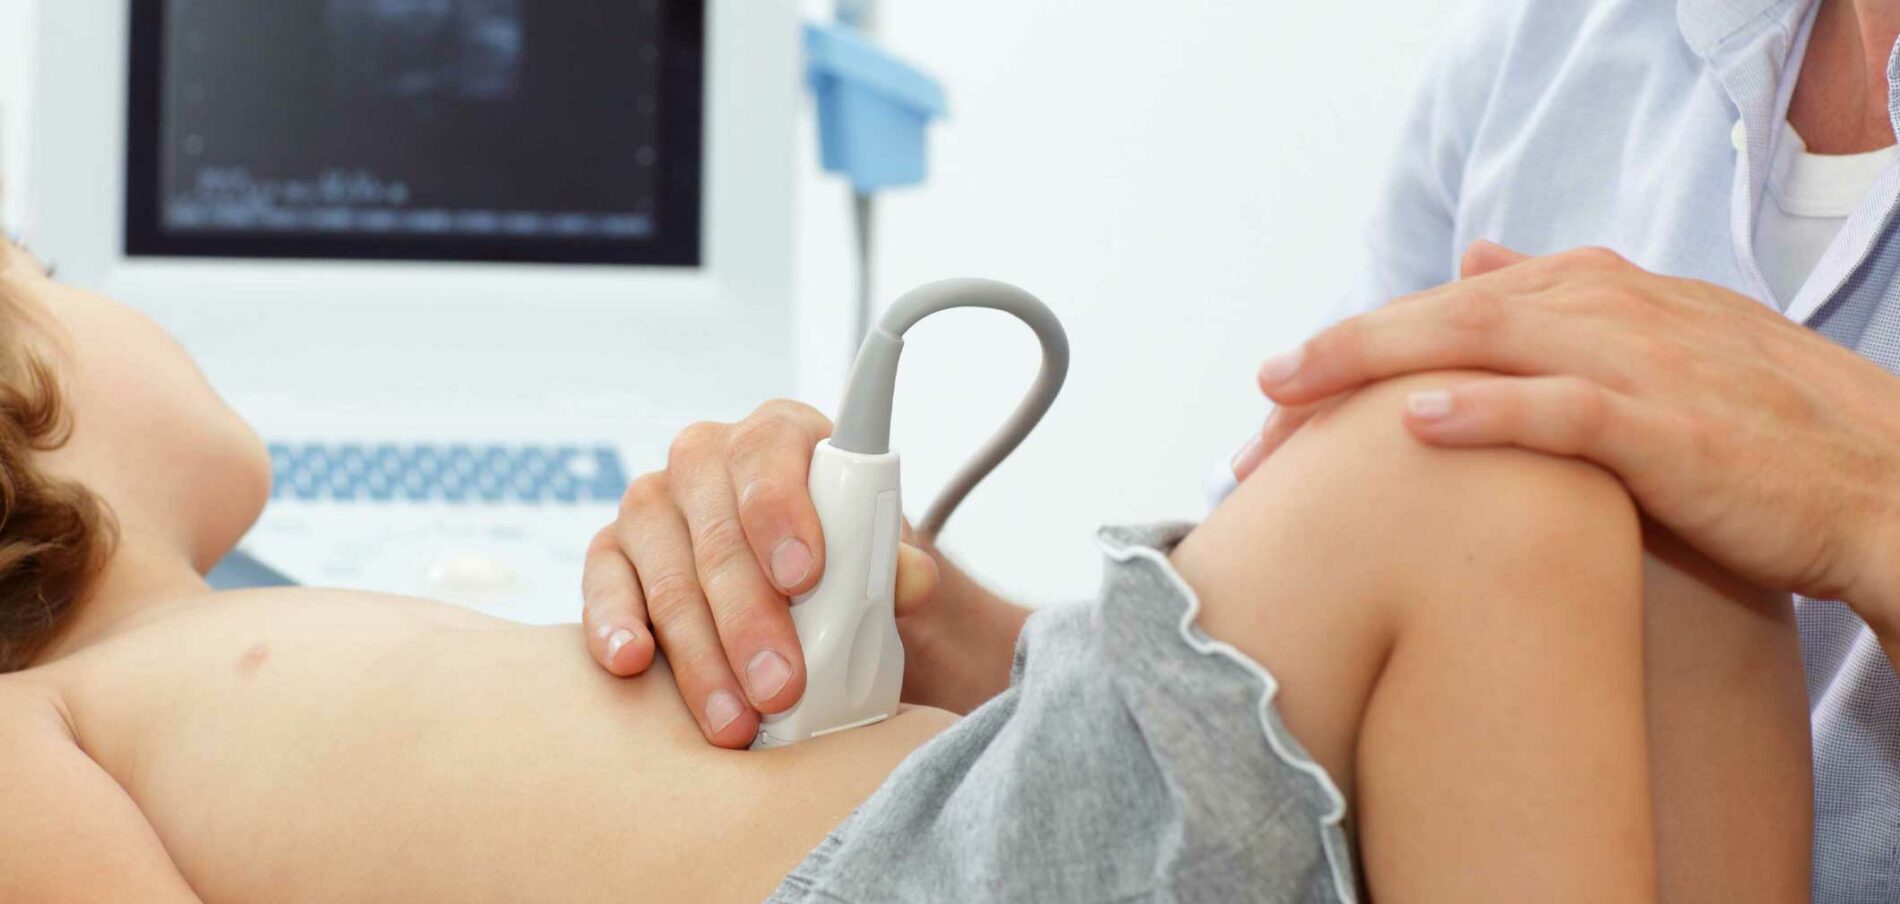 pediatric-ultrasound-imaging